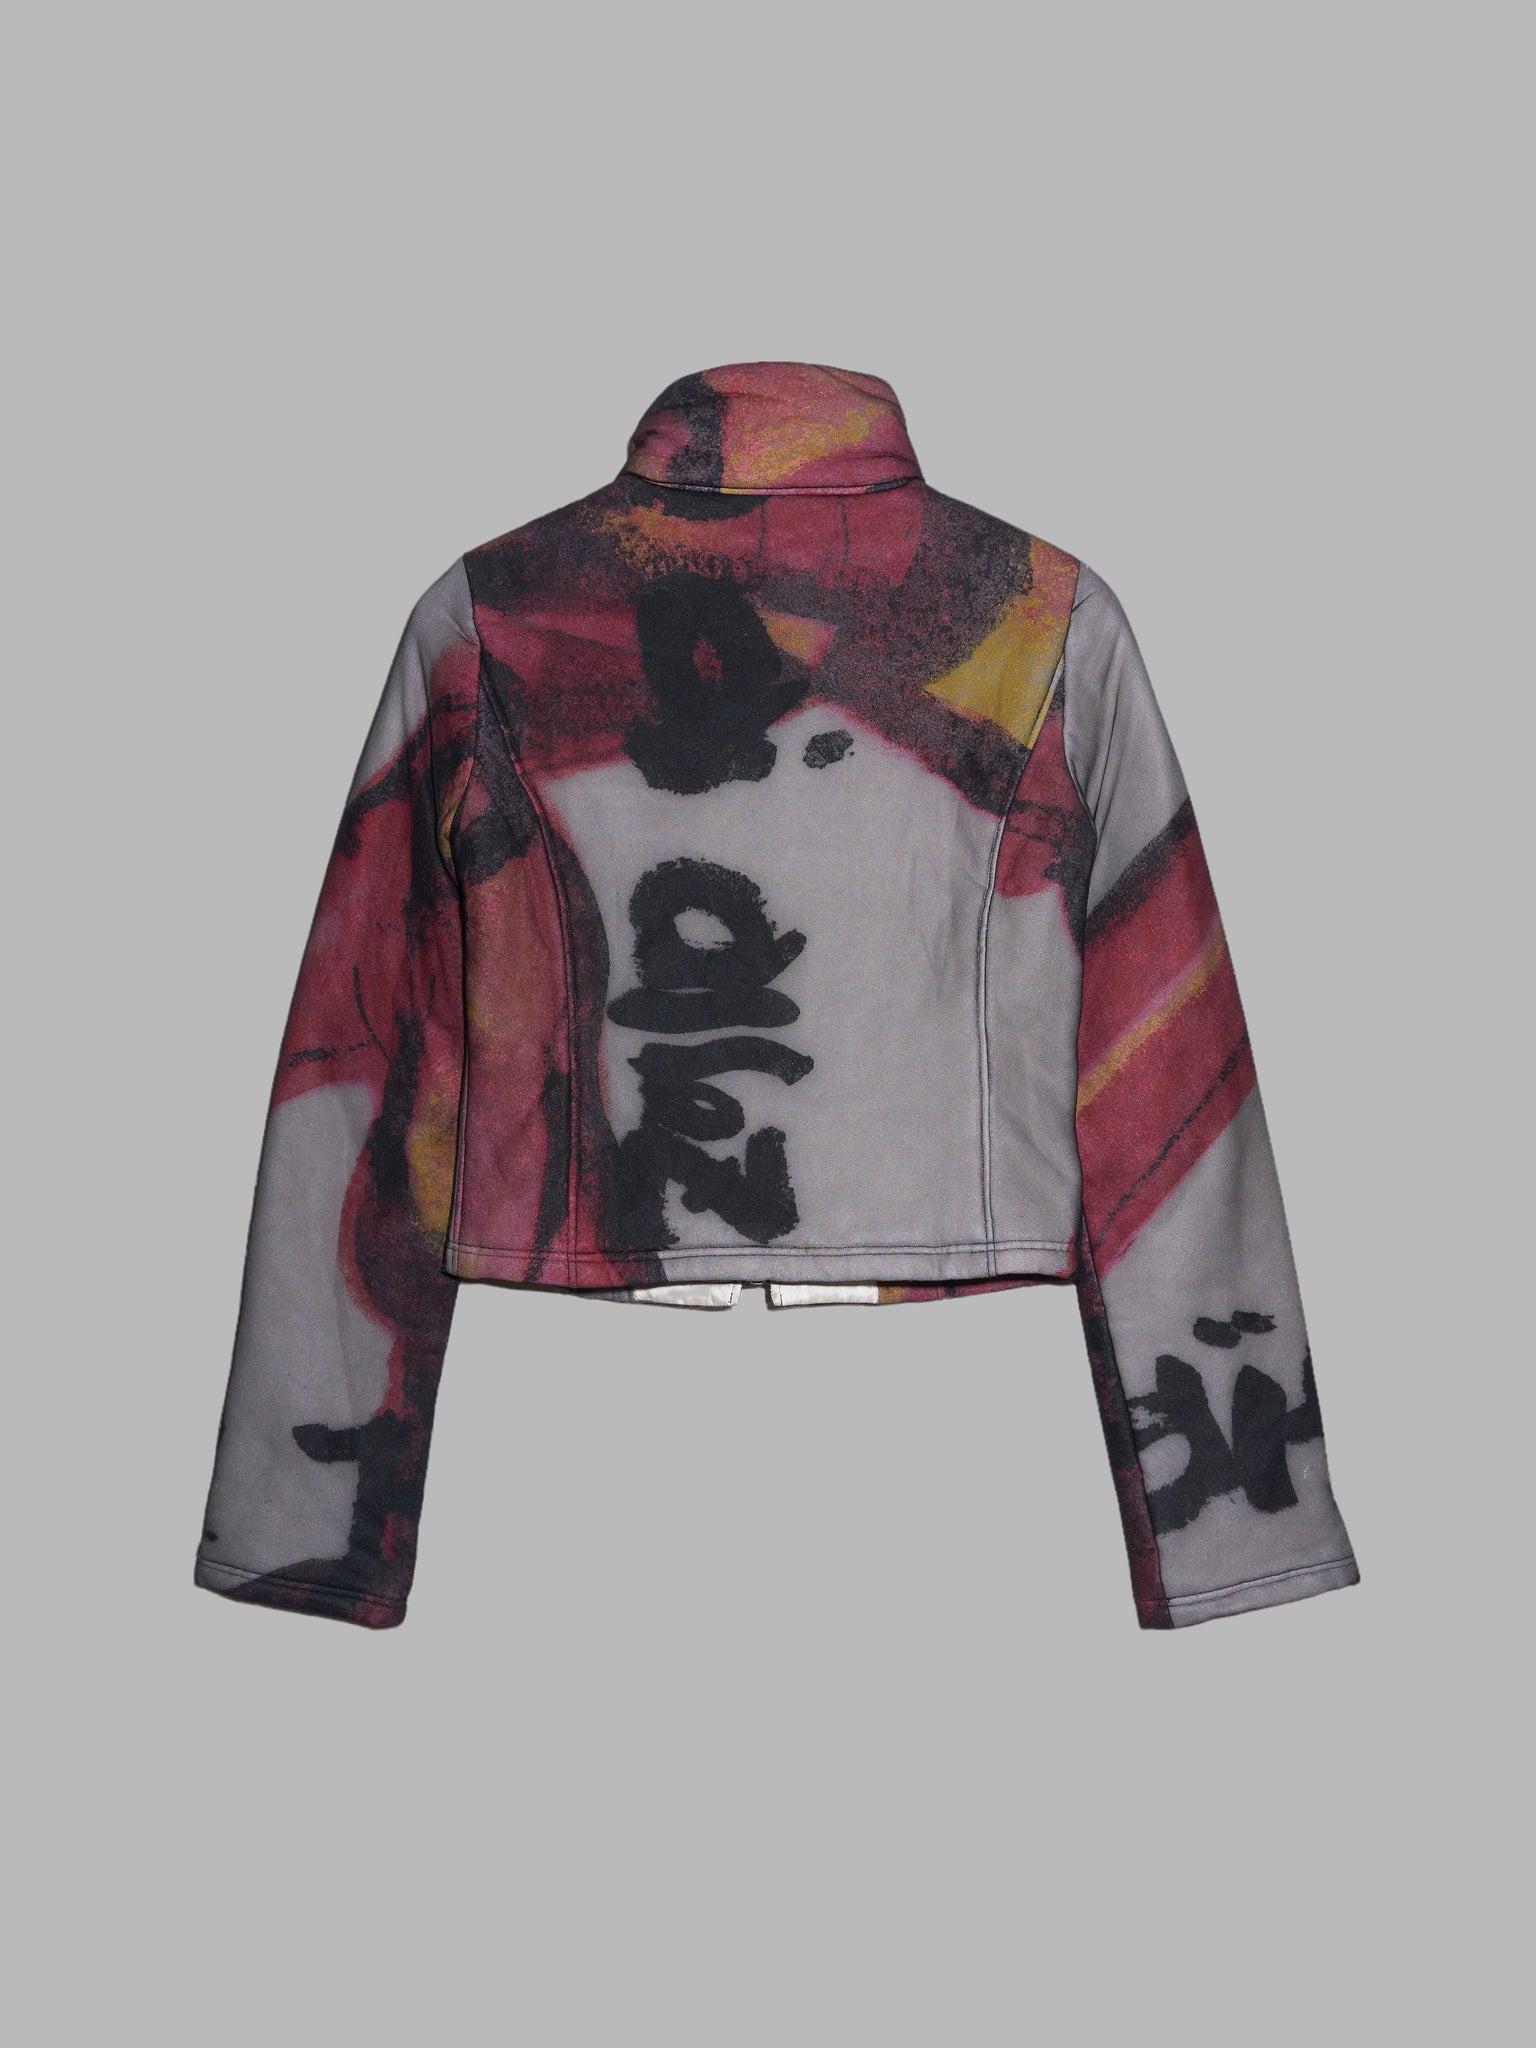 Y + contact by masafumi yoshikawa puffy multicolour ‘spray paint’ jacket sample